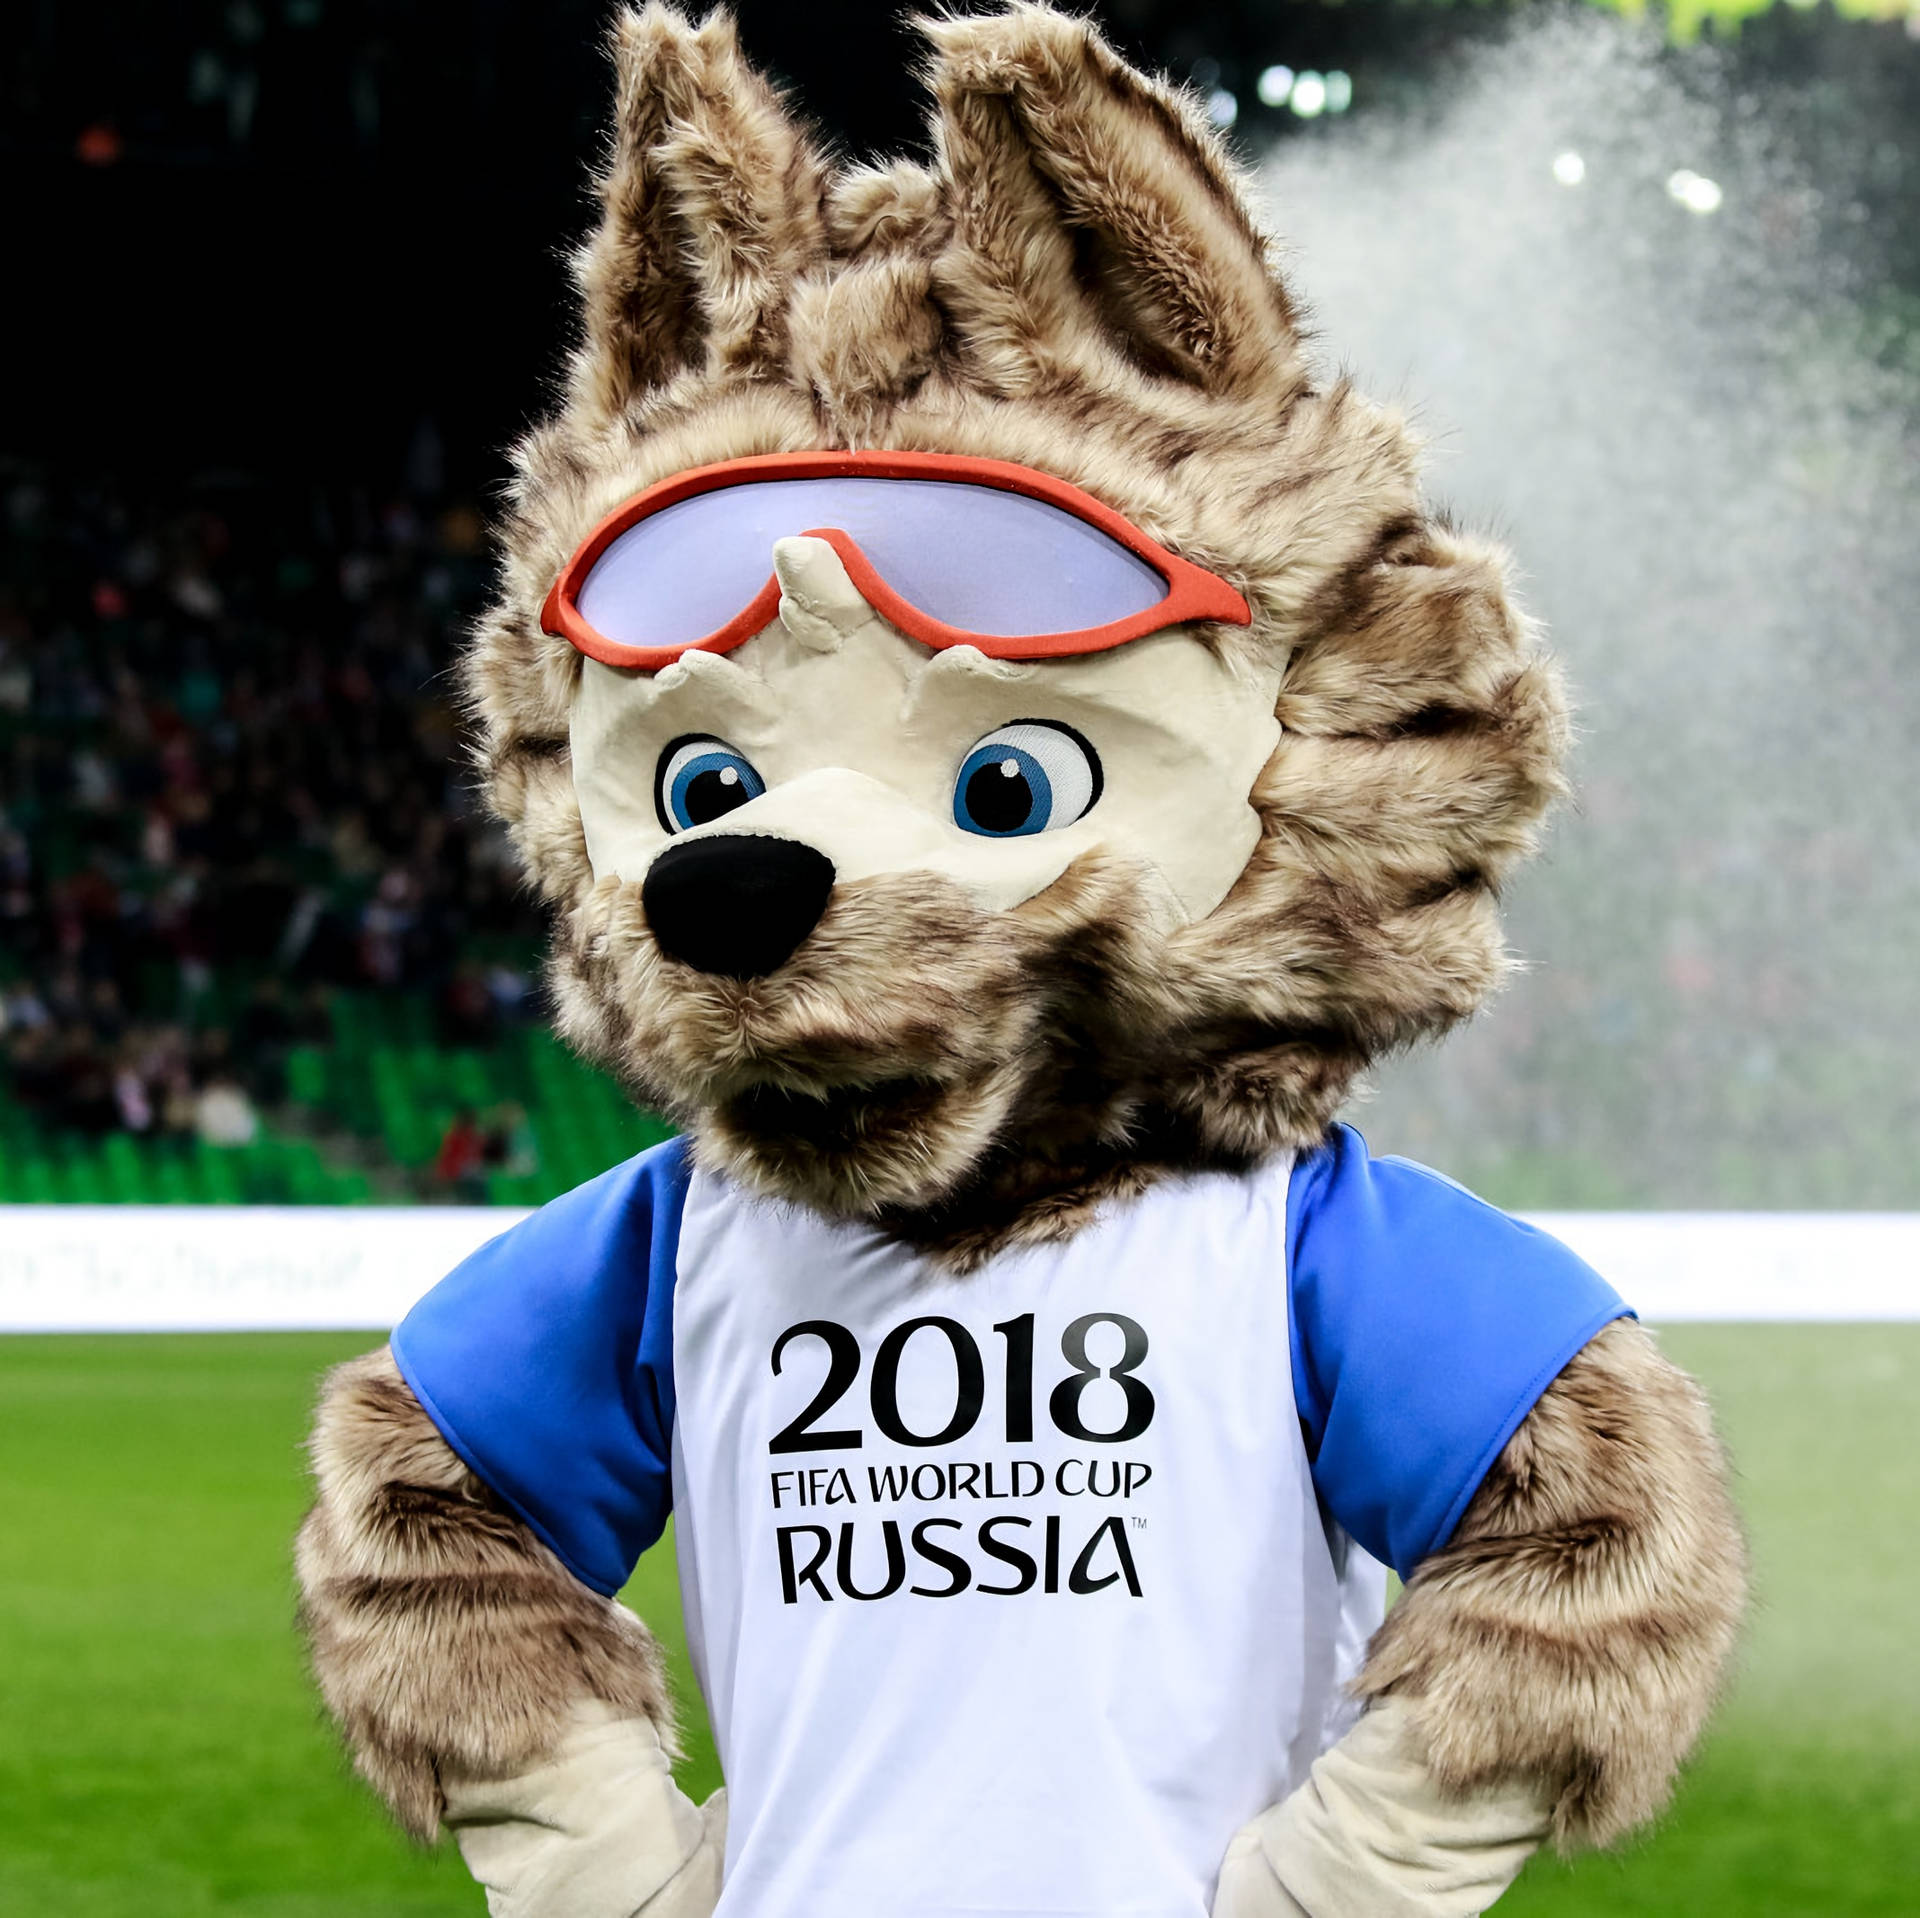 Russian World Cup Mascot 2018